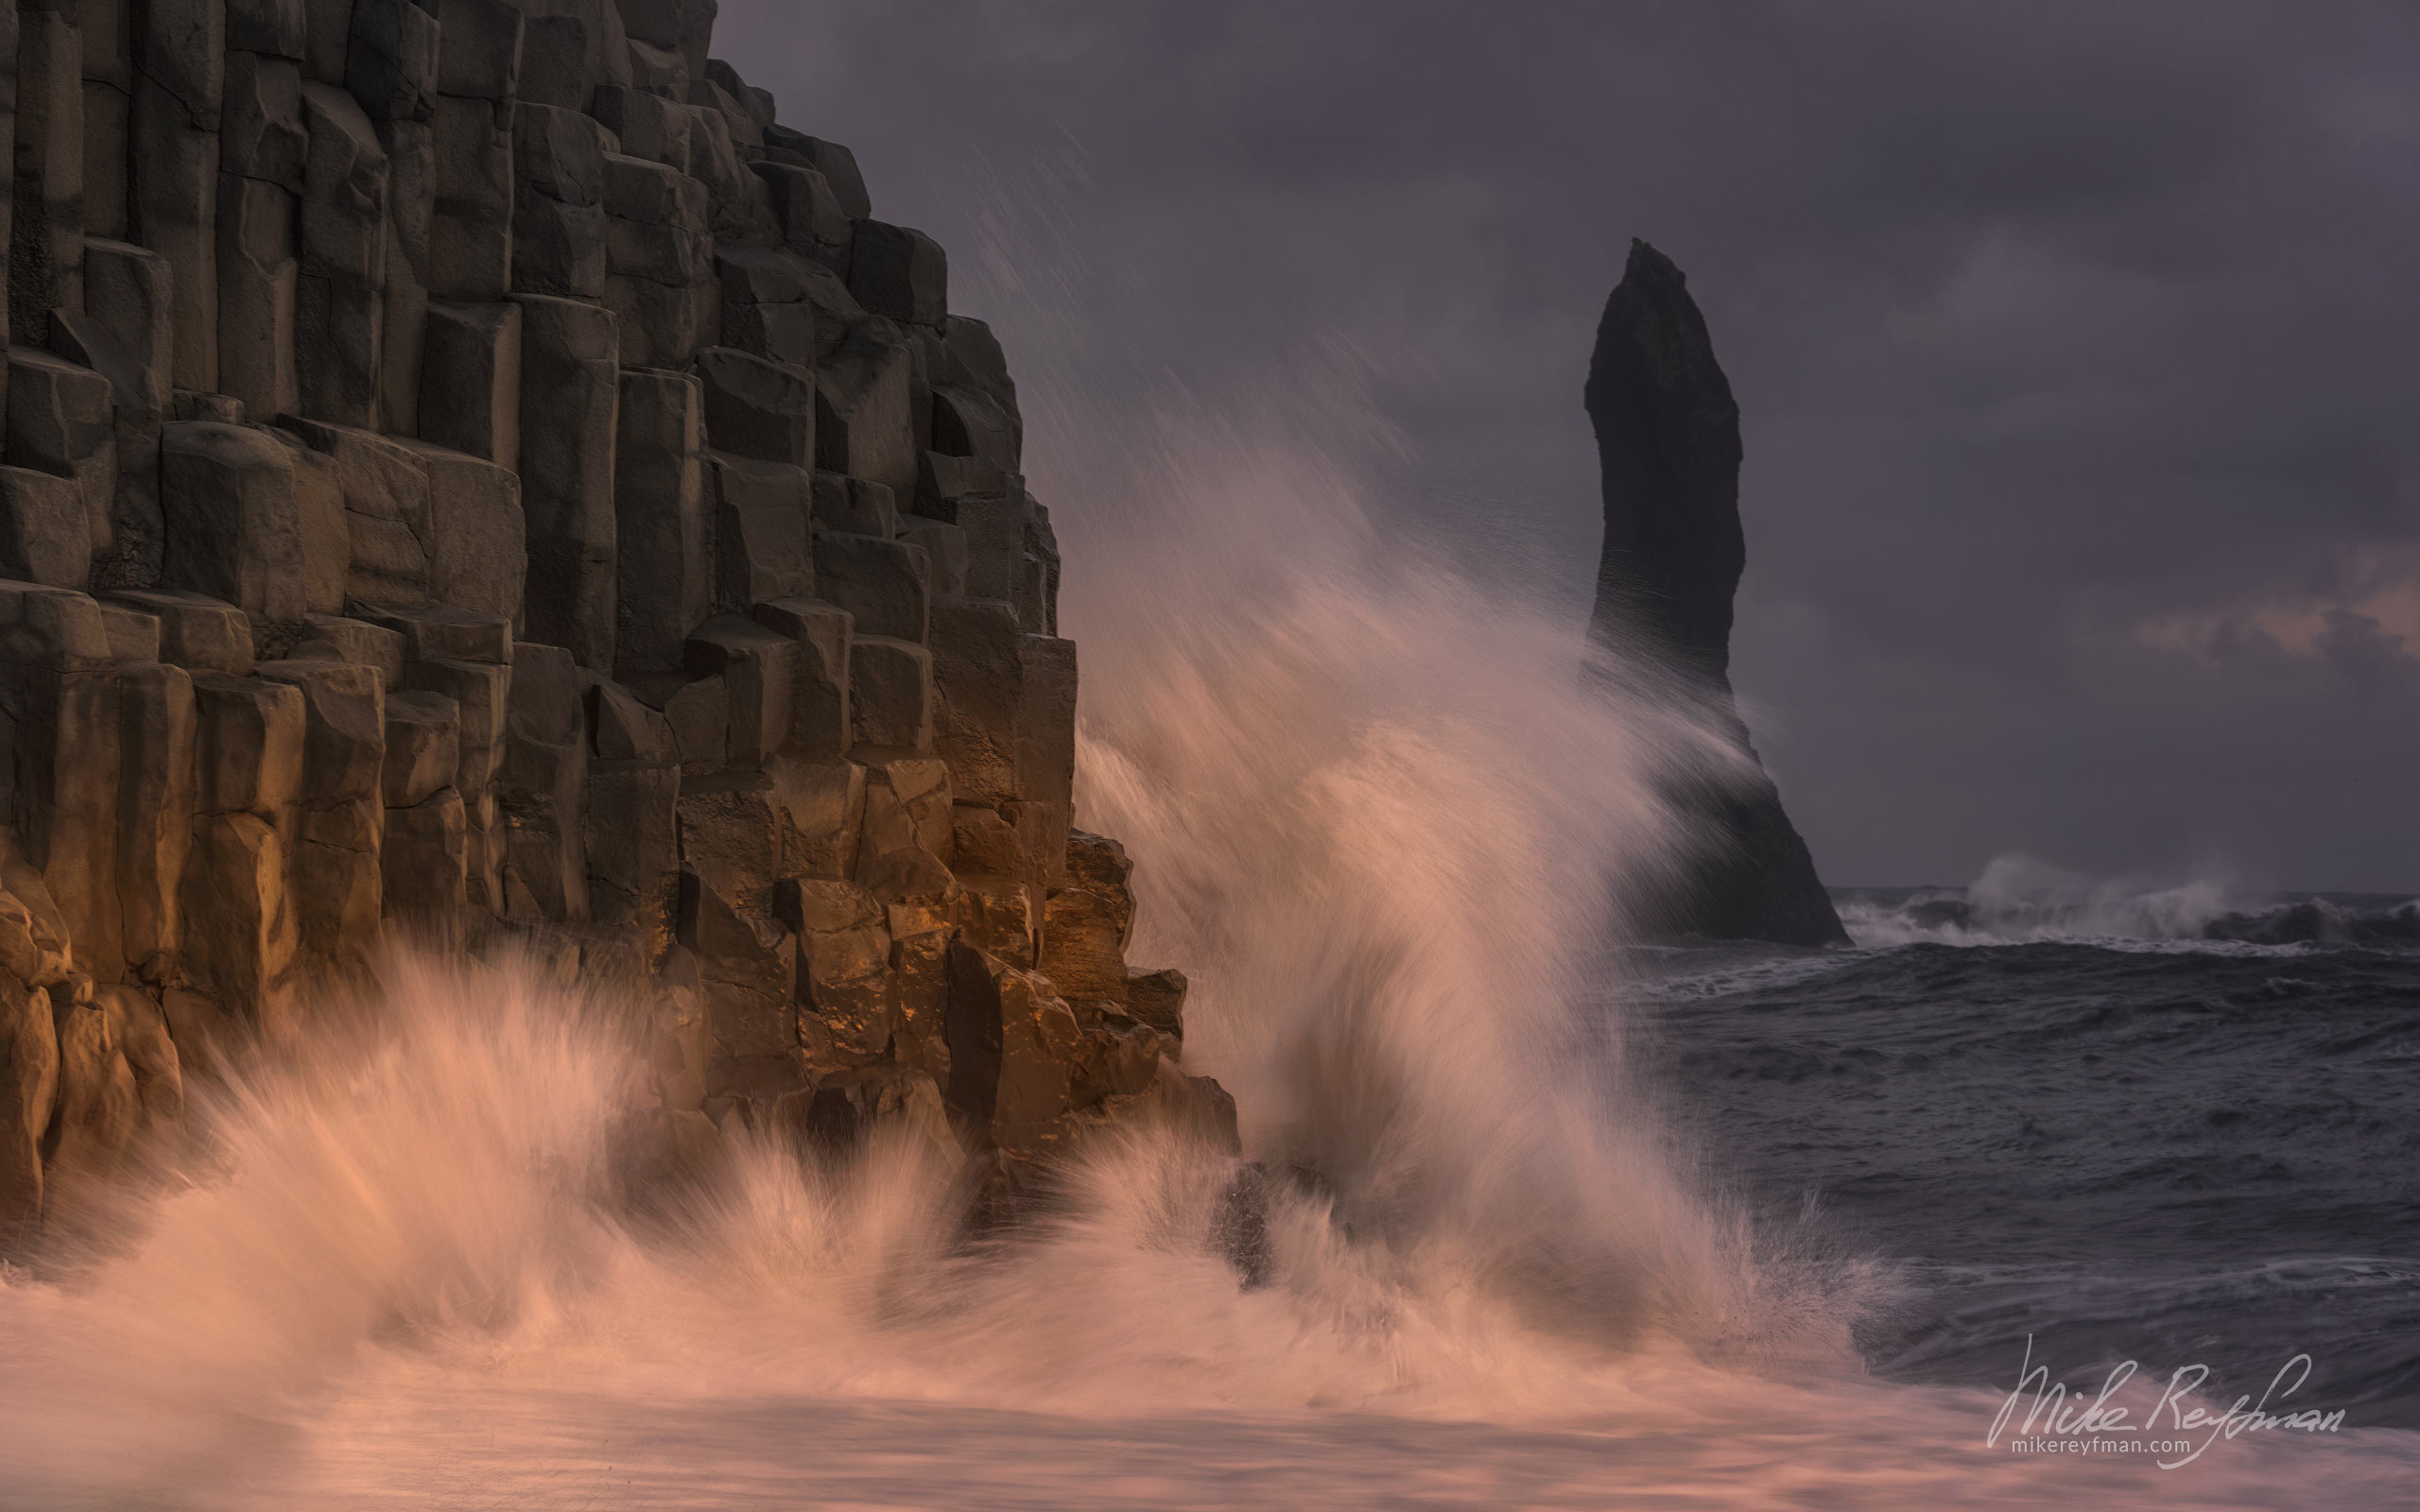 Breaking waves hitting Mt. Reynisfjall and Reynisdrangar basalt sea stacks at Reynisfjara black sand beach. Southern Iceland. 014-IC-CL_D1E3481 - Where Lava Meets the Ocean. Iceland coastline. - Mike Reyfman Photography